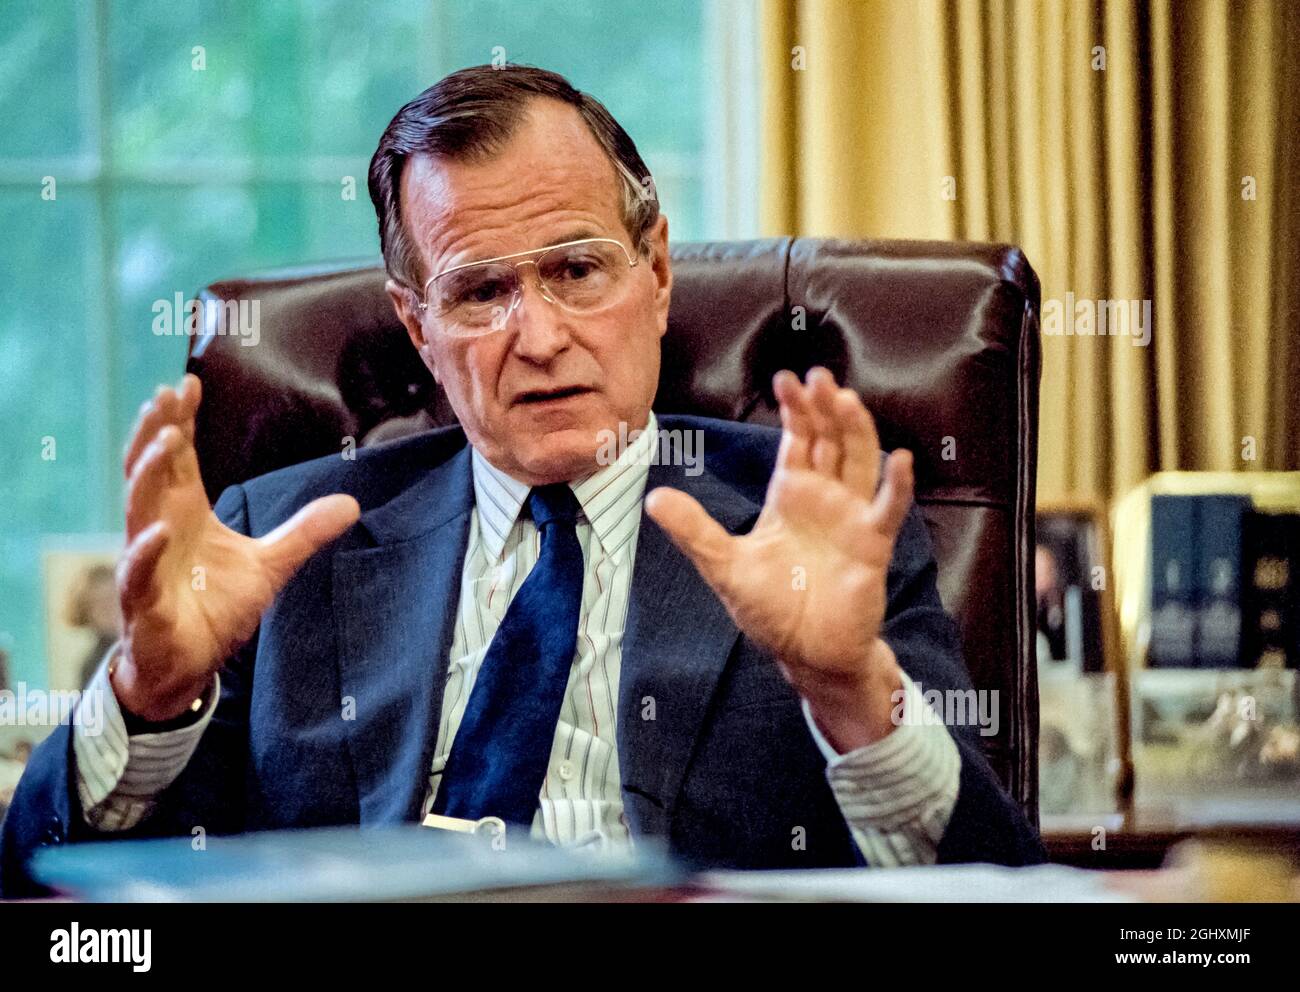 U.S. President George H.W. Bush at his Oval Office desk, White House, Washington, D.C., USA, Michael Geissinger, 1989 Stock Photo